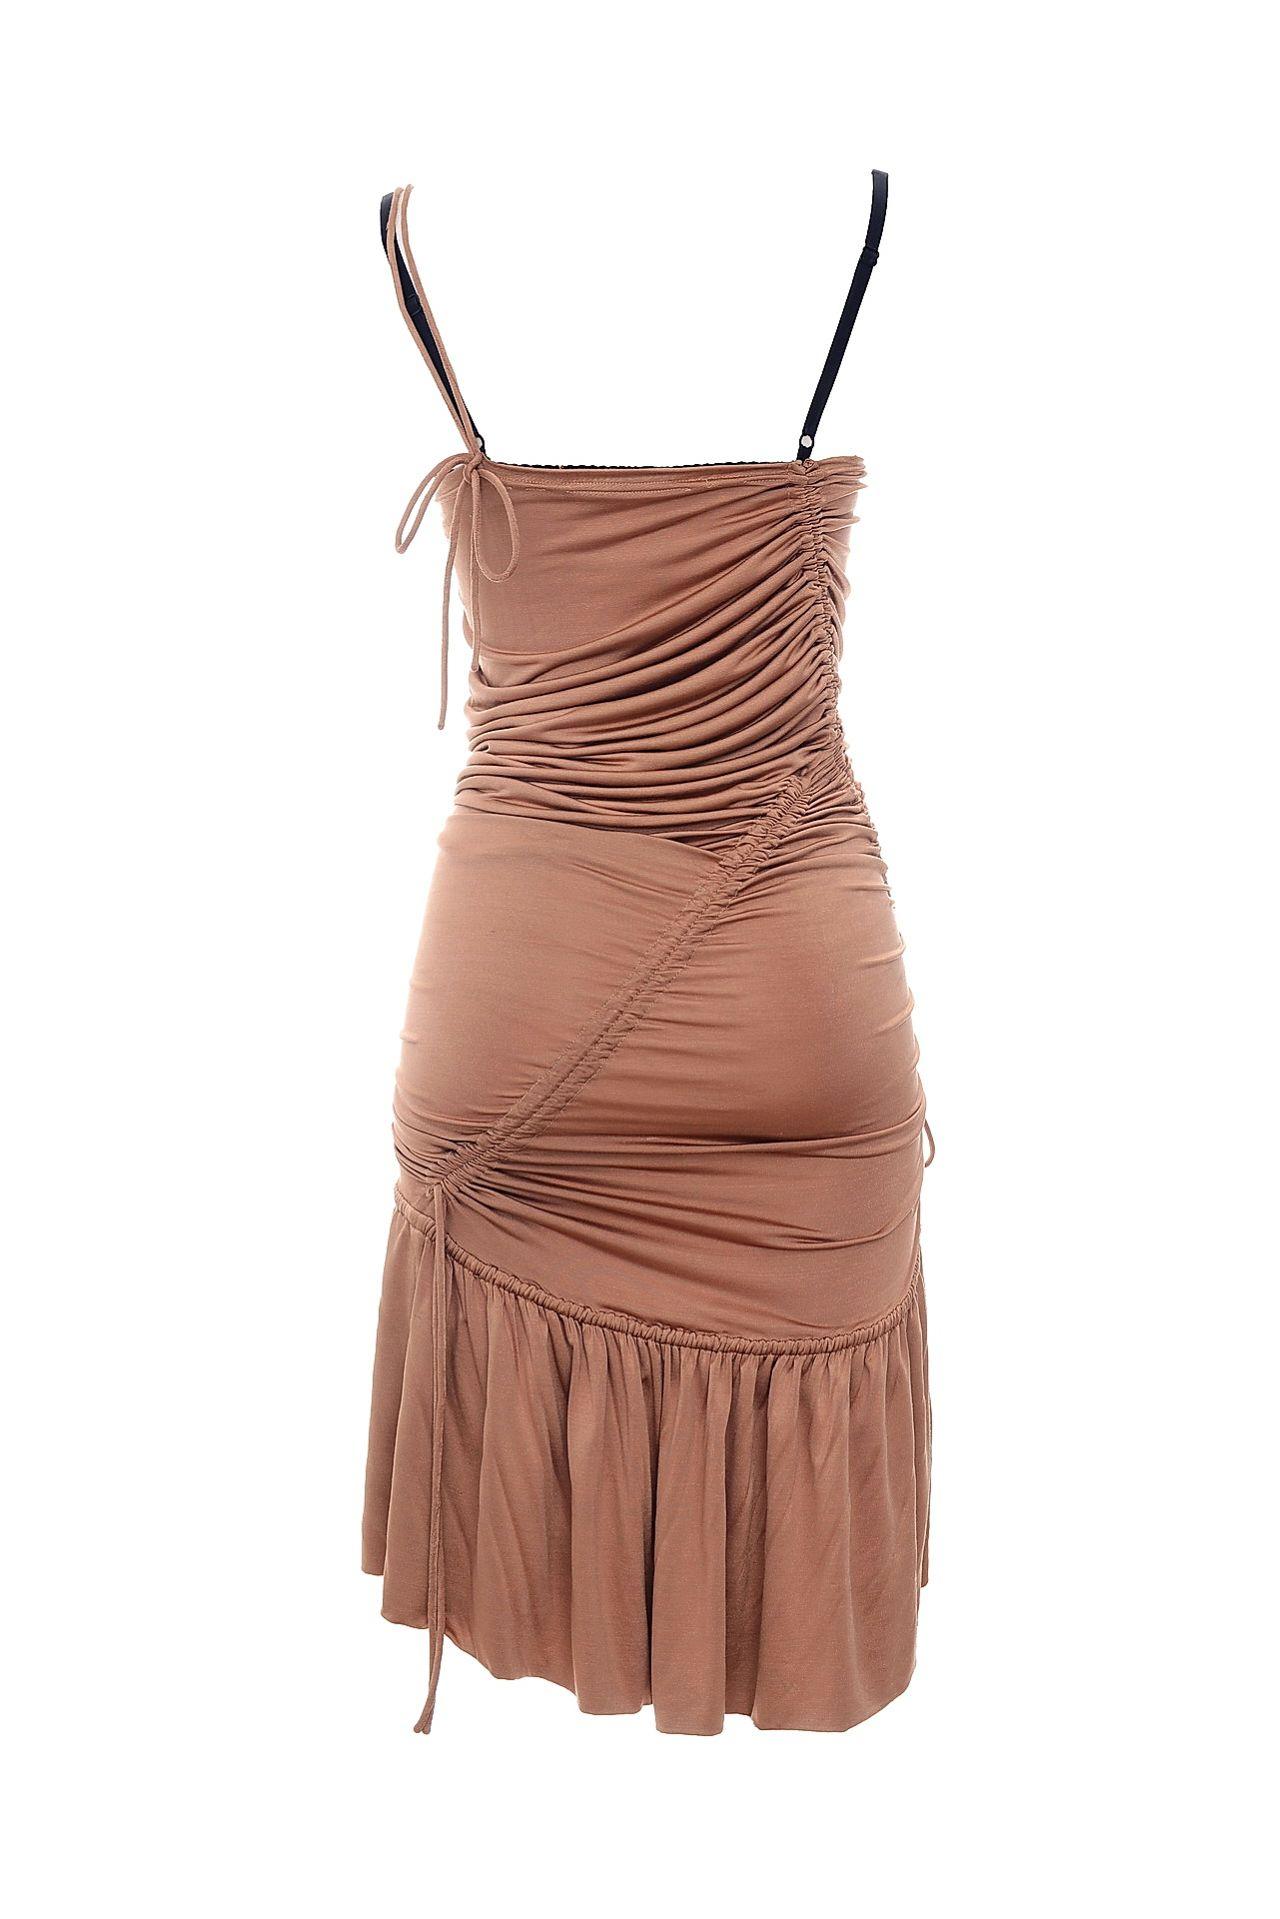 S/S 2003 Dolce & Gabbana 
Nude Jersey Dress
